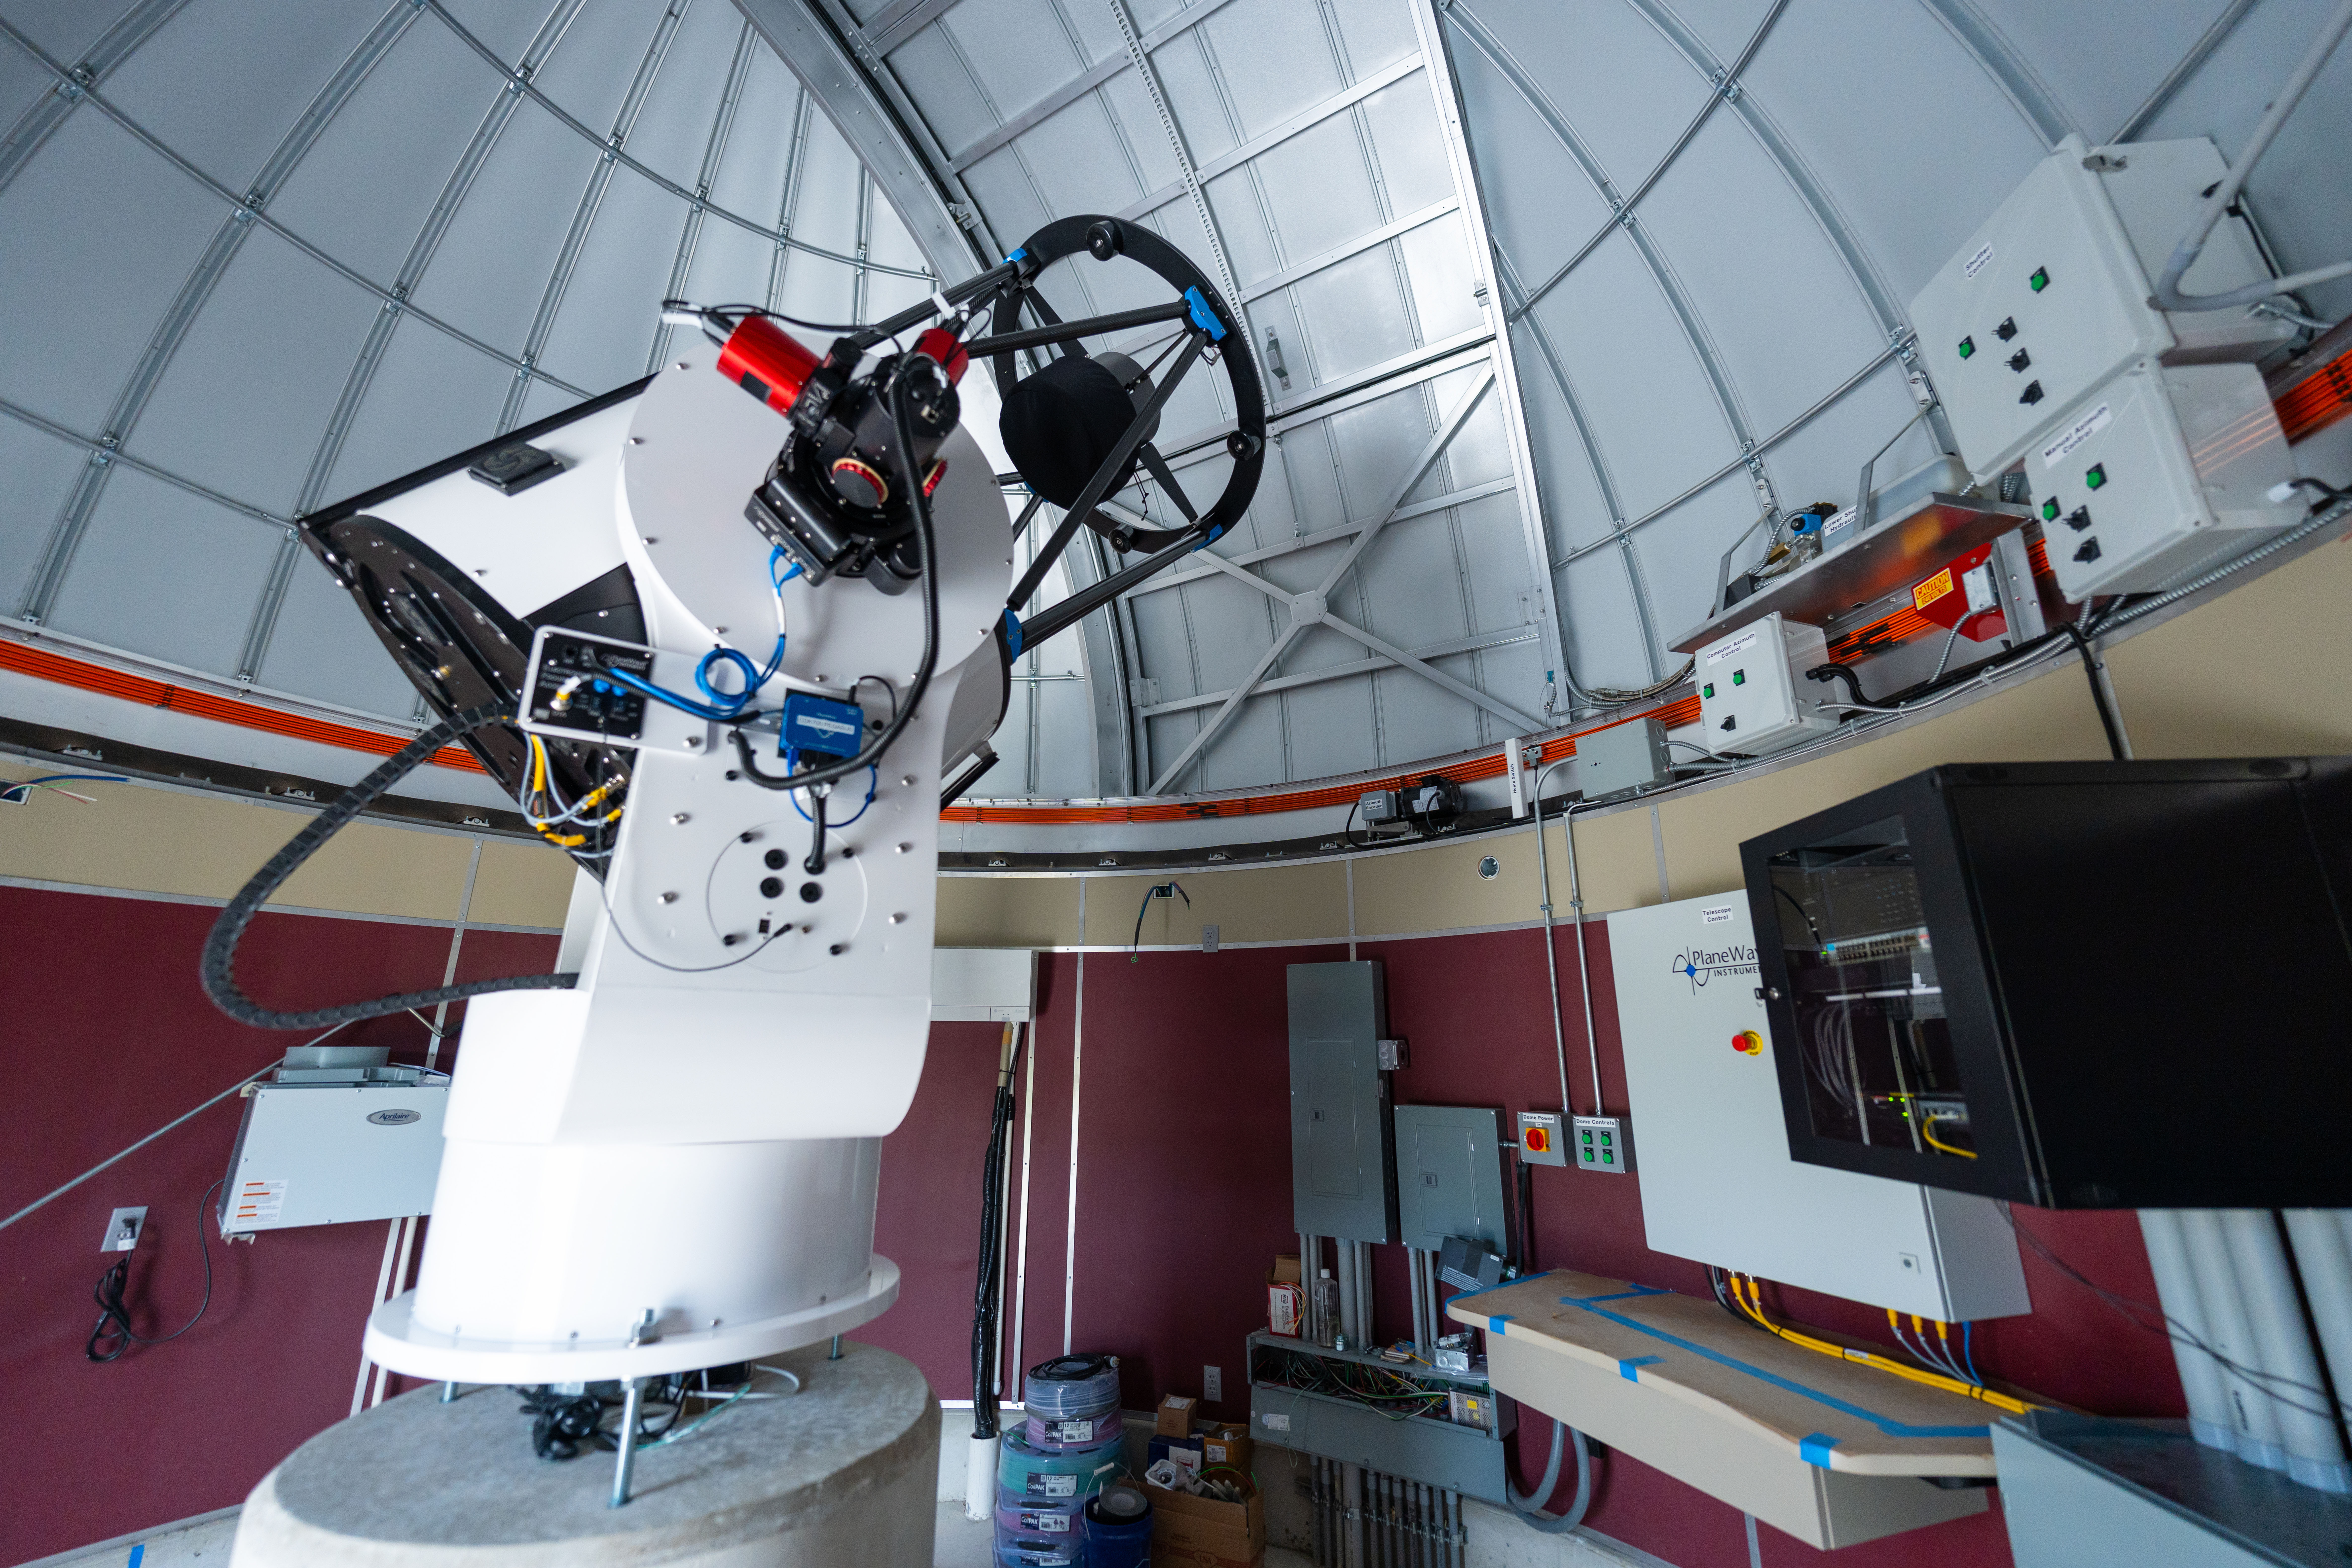 Jackson College Observatory